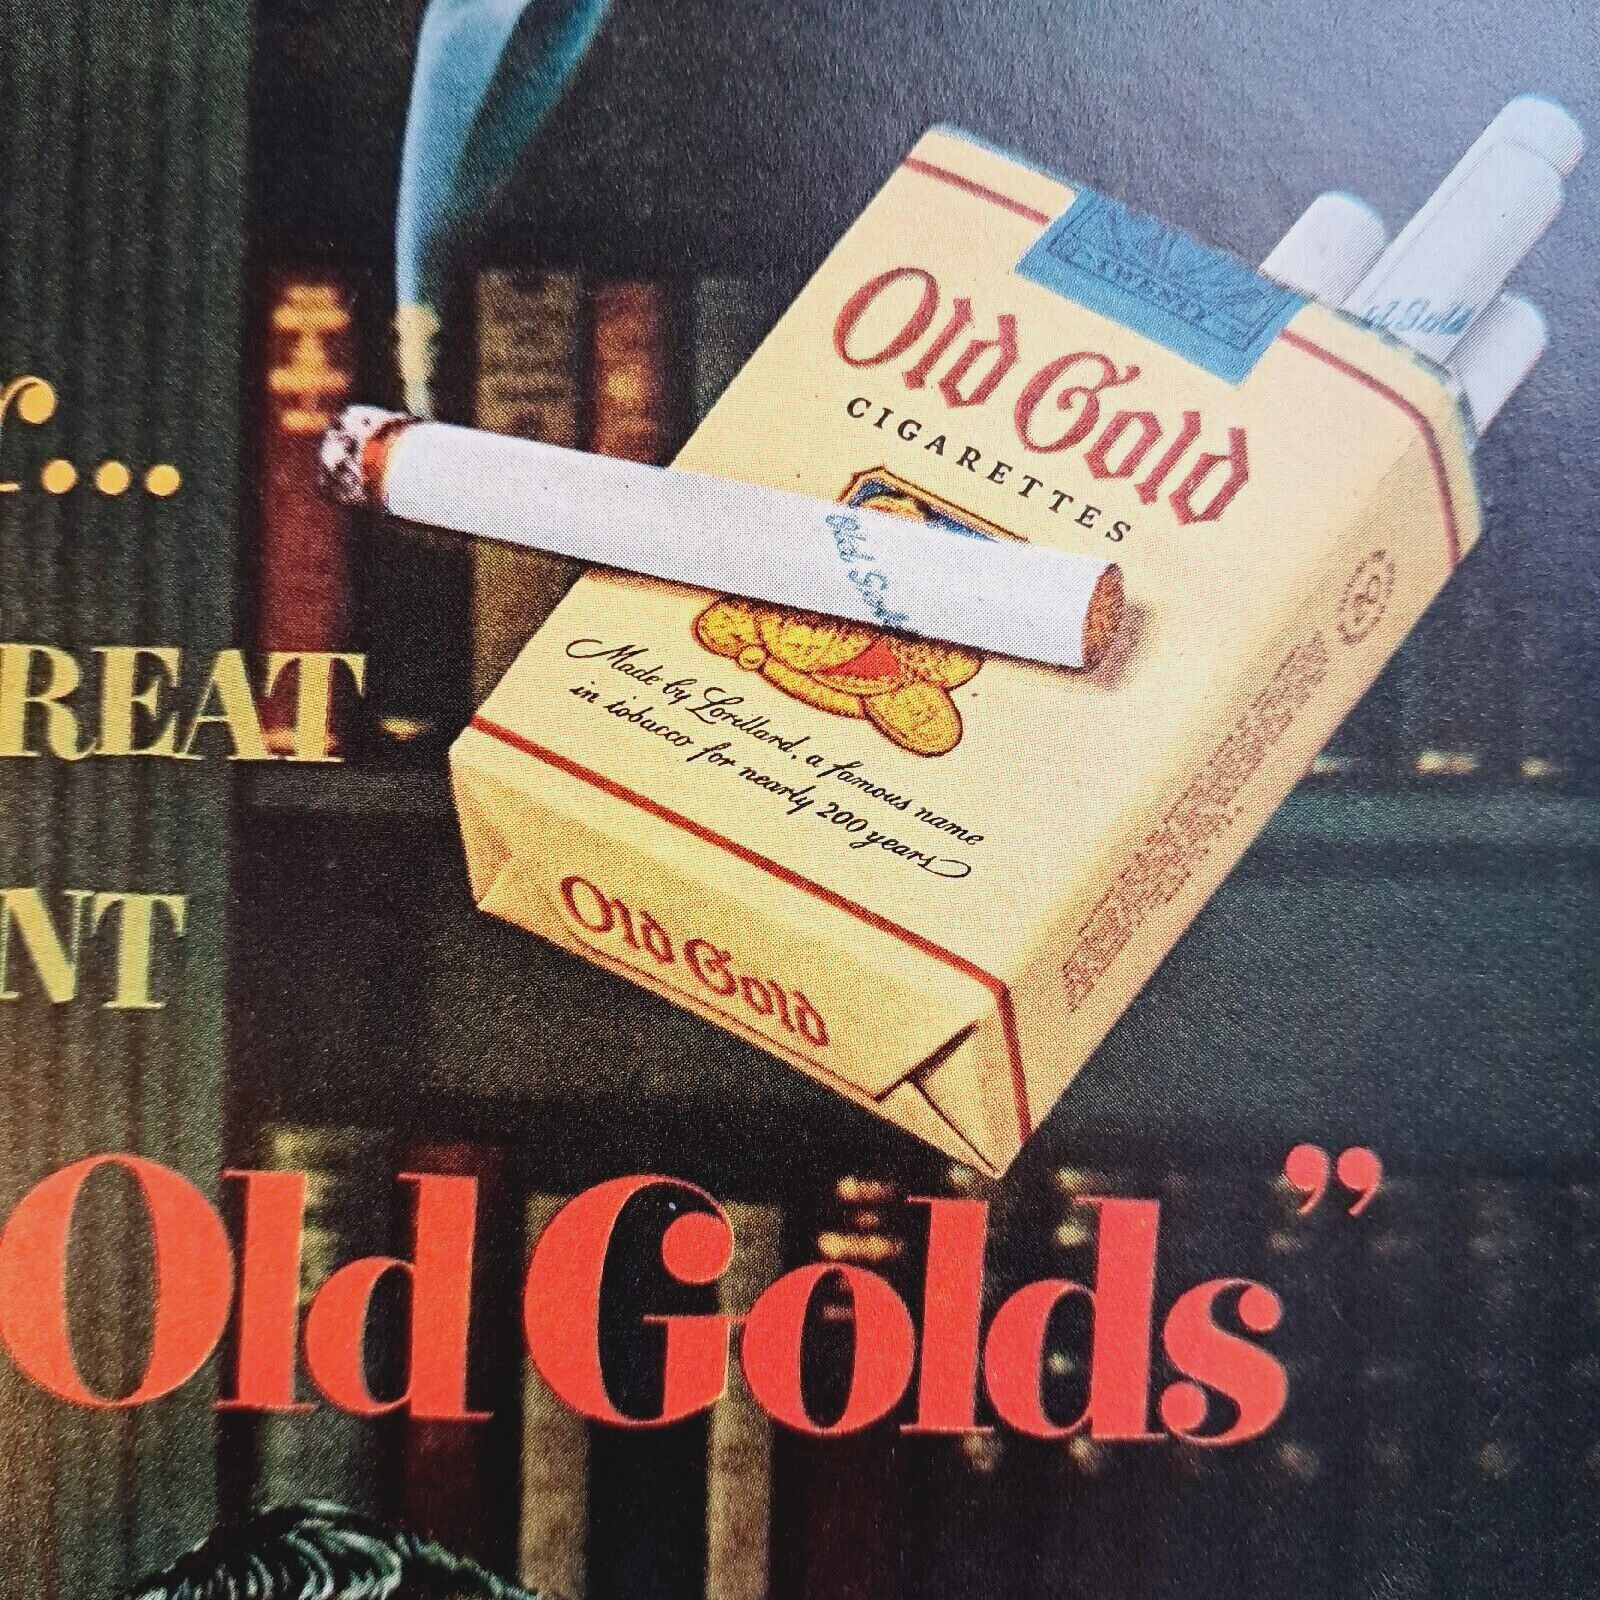 1951 Print Ad OLD GOLD CIGARETTES DENNIS JAMES ORIGINAL AMATUER HOUR NBC TOBACCO